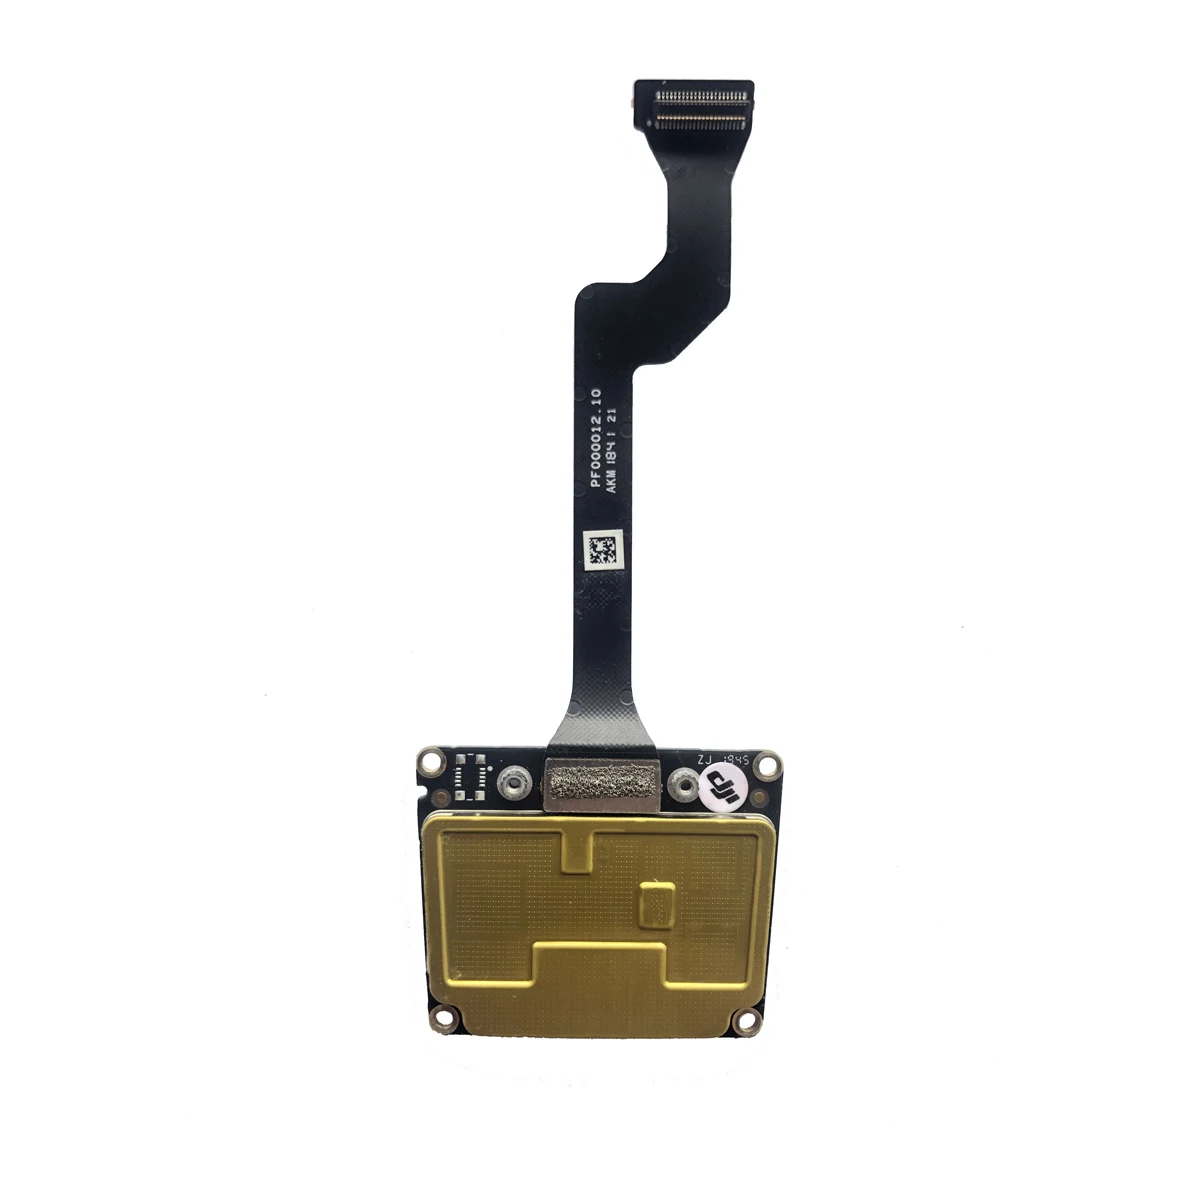 

Original Dji Mavic 2 Pro / Zoom Gimbal Board Drone Replacement Repair Accessories Service Spare Parts